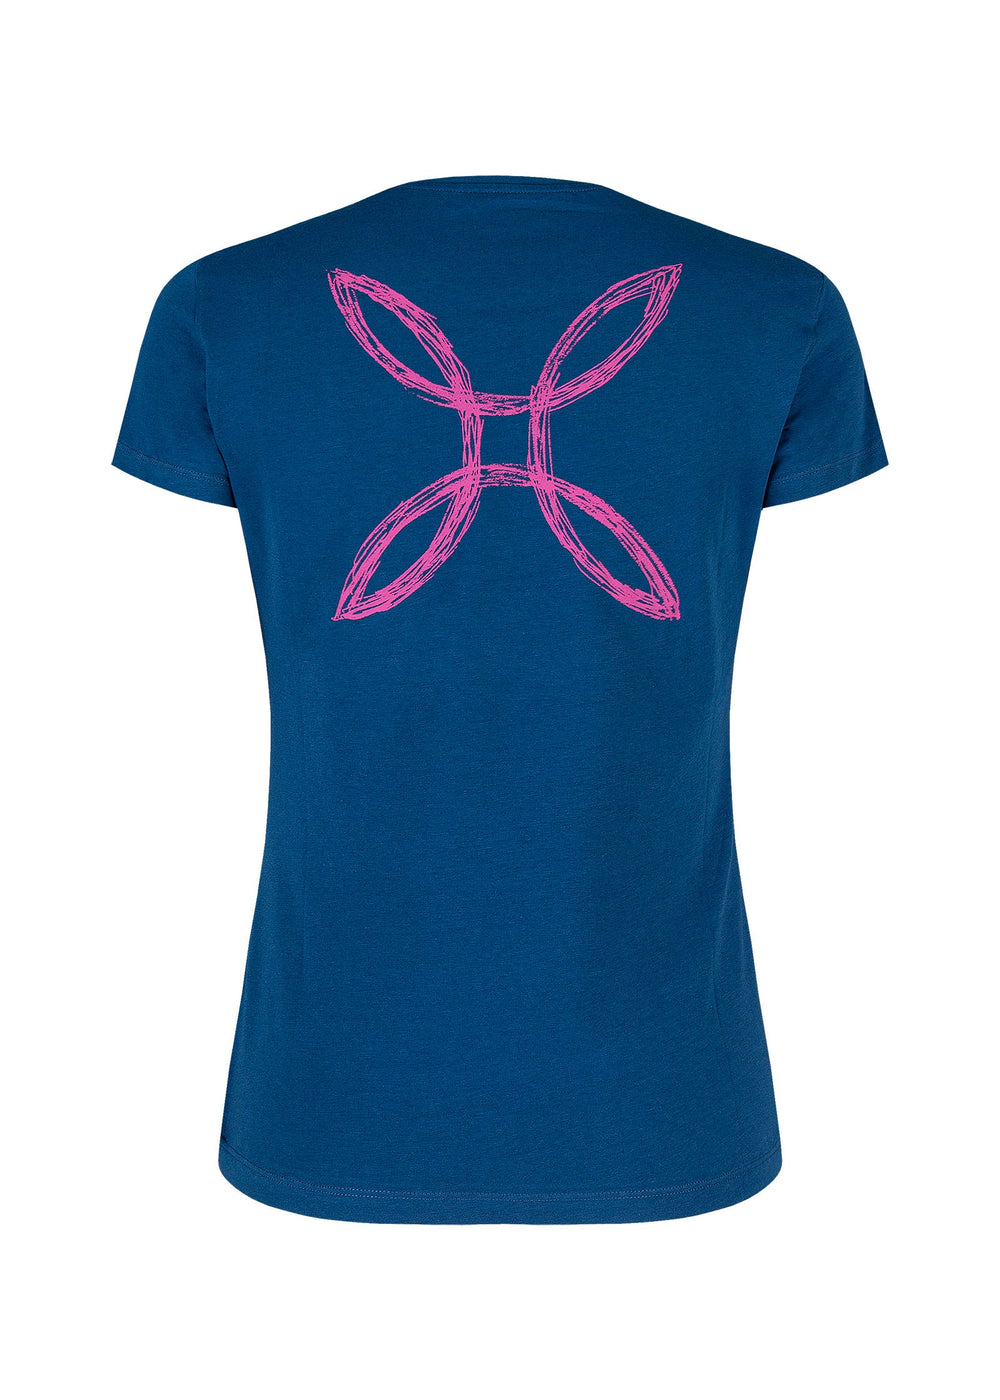 Pencil Logo T-Shirt Woman - Deep Blue/Intense Violet (8707) - Blogside